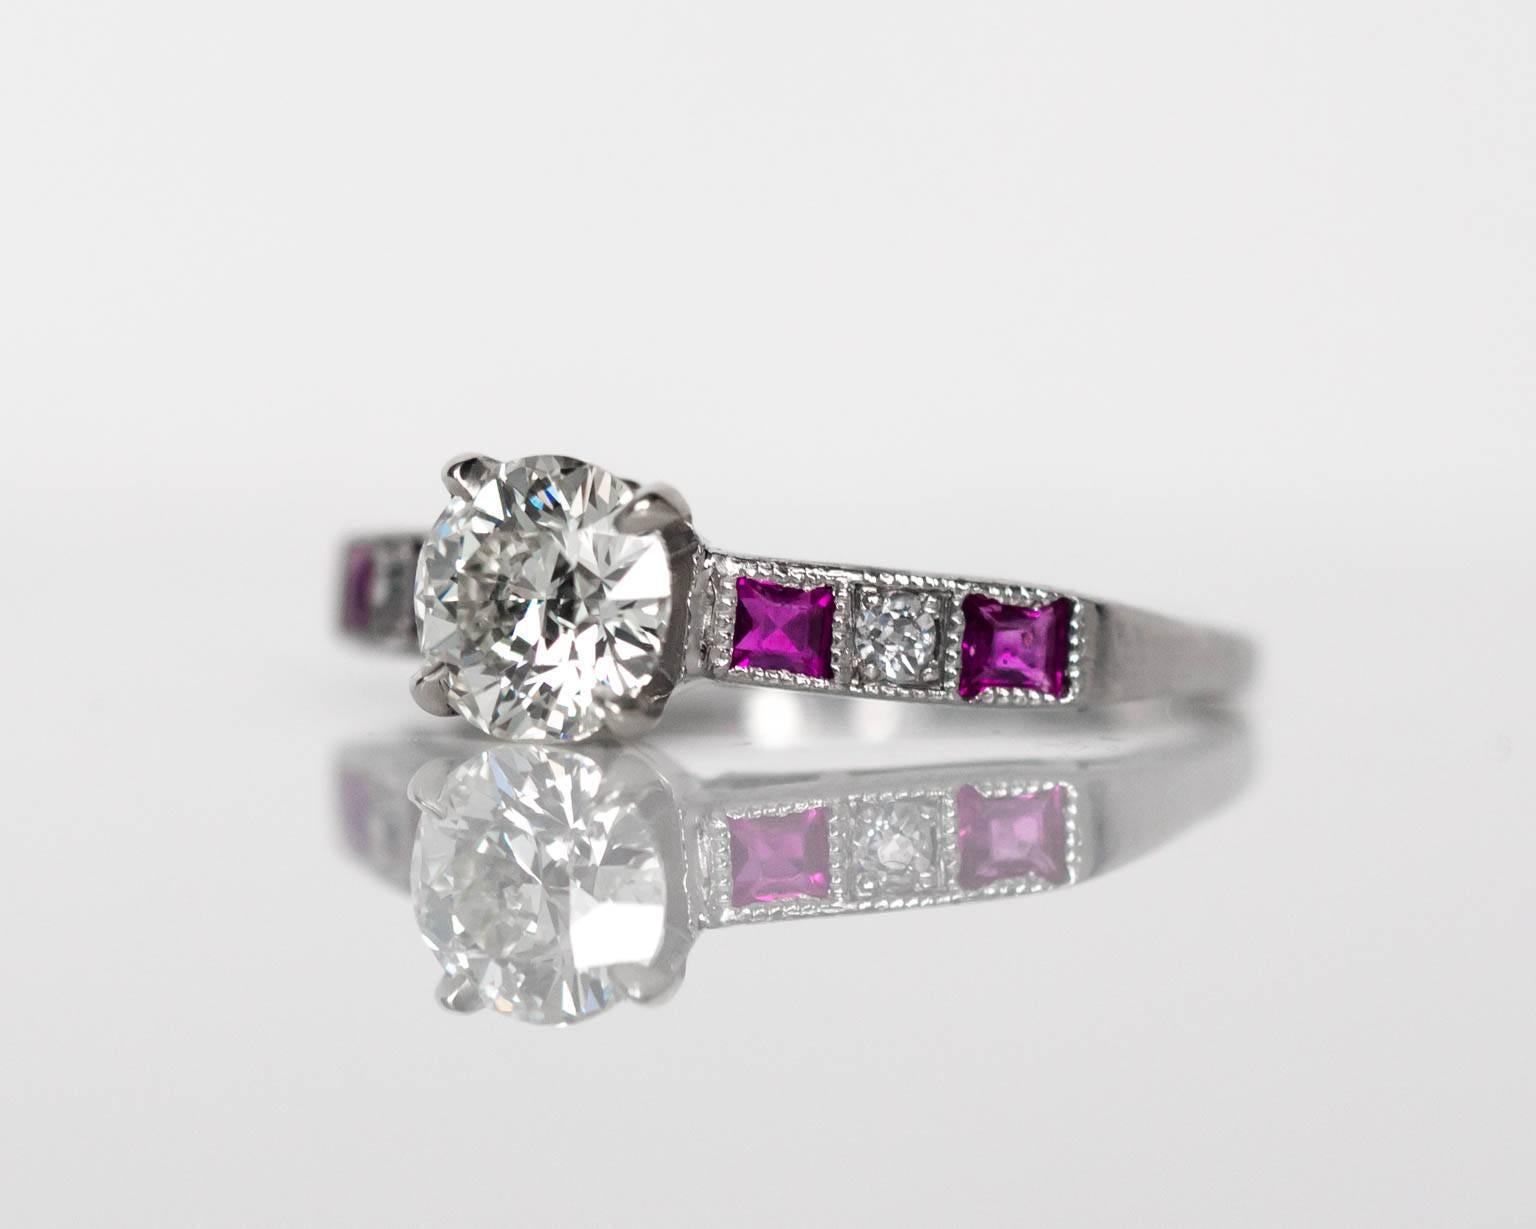 1940s Art Deco 1.01 Carat GIA Certified European Cut Diamond Ruby Platinum Ring For Sale 1